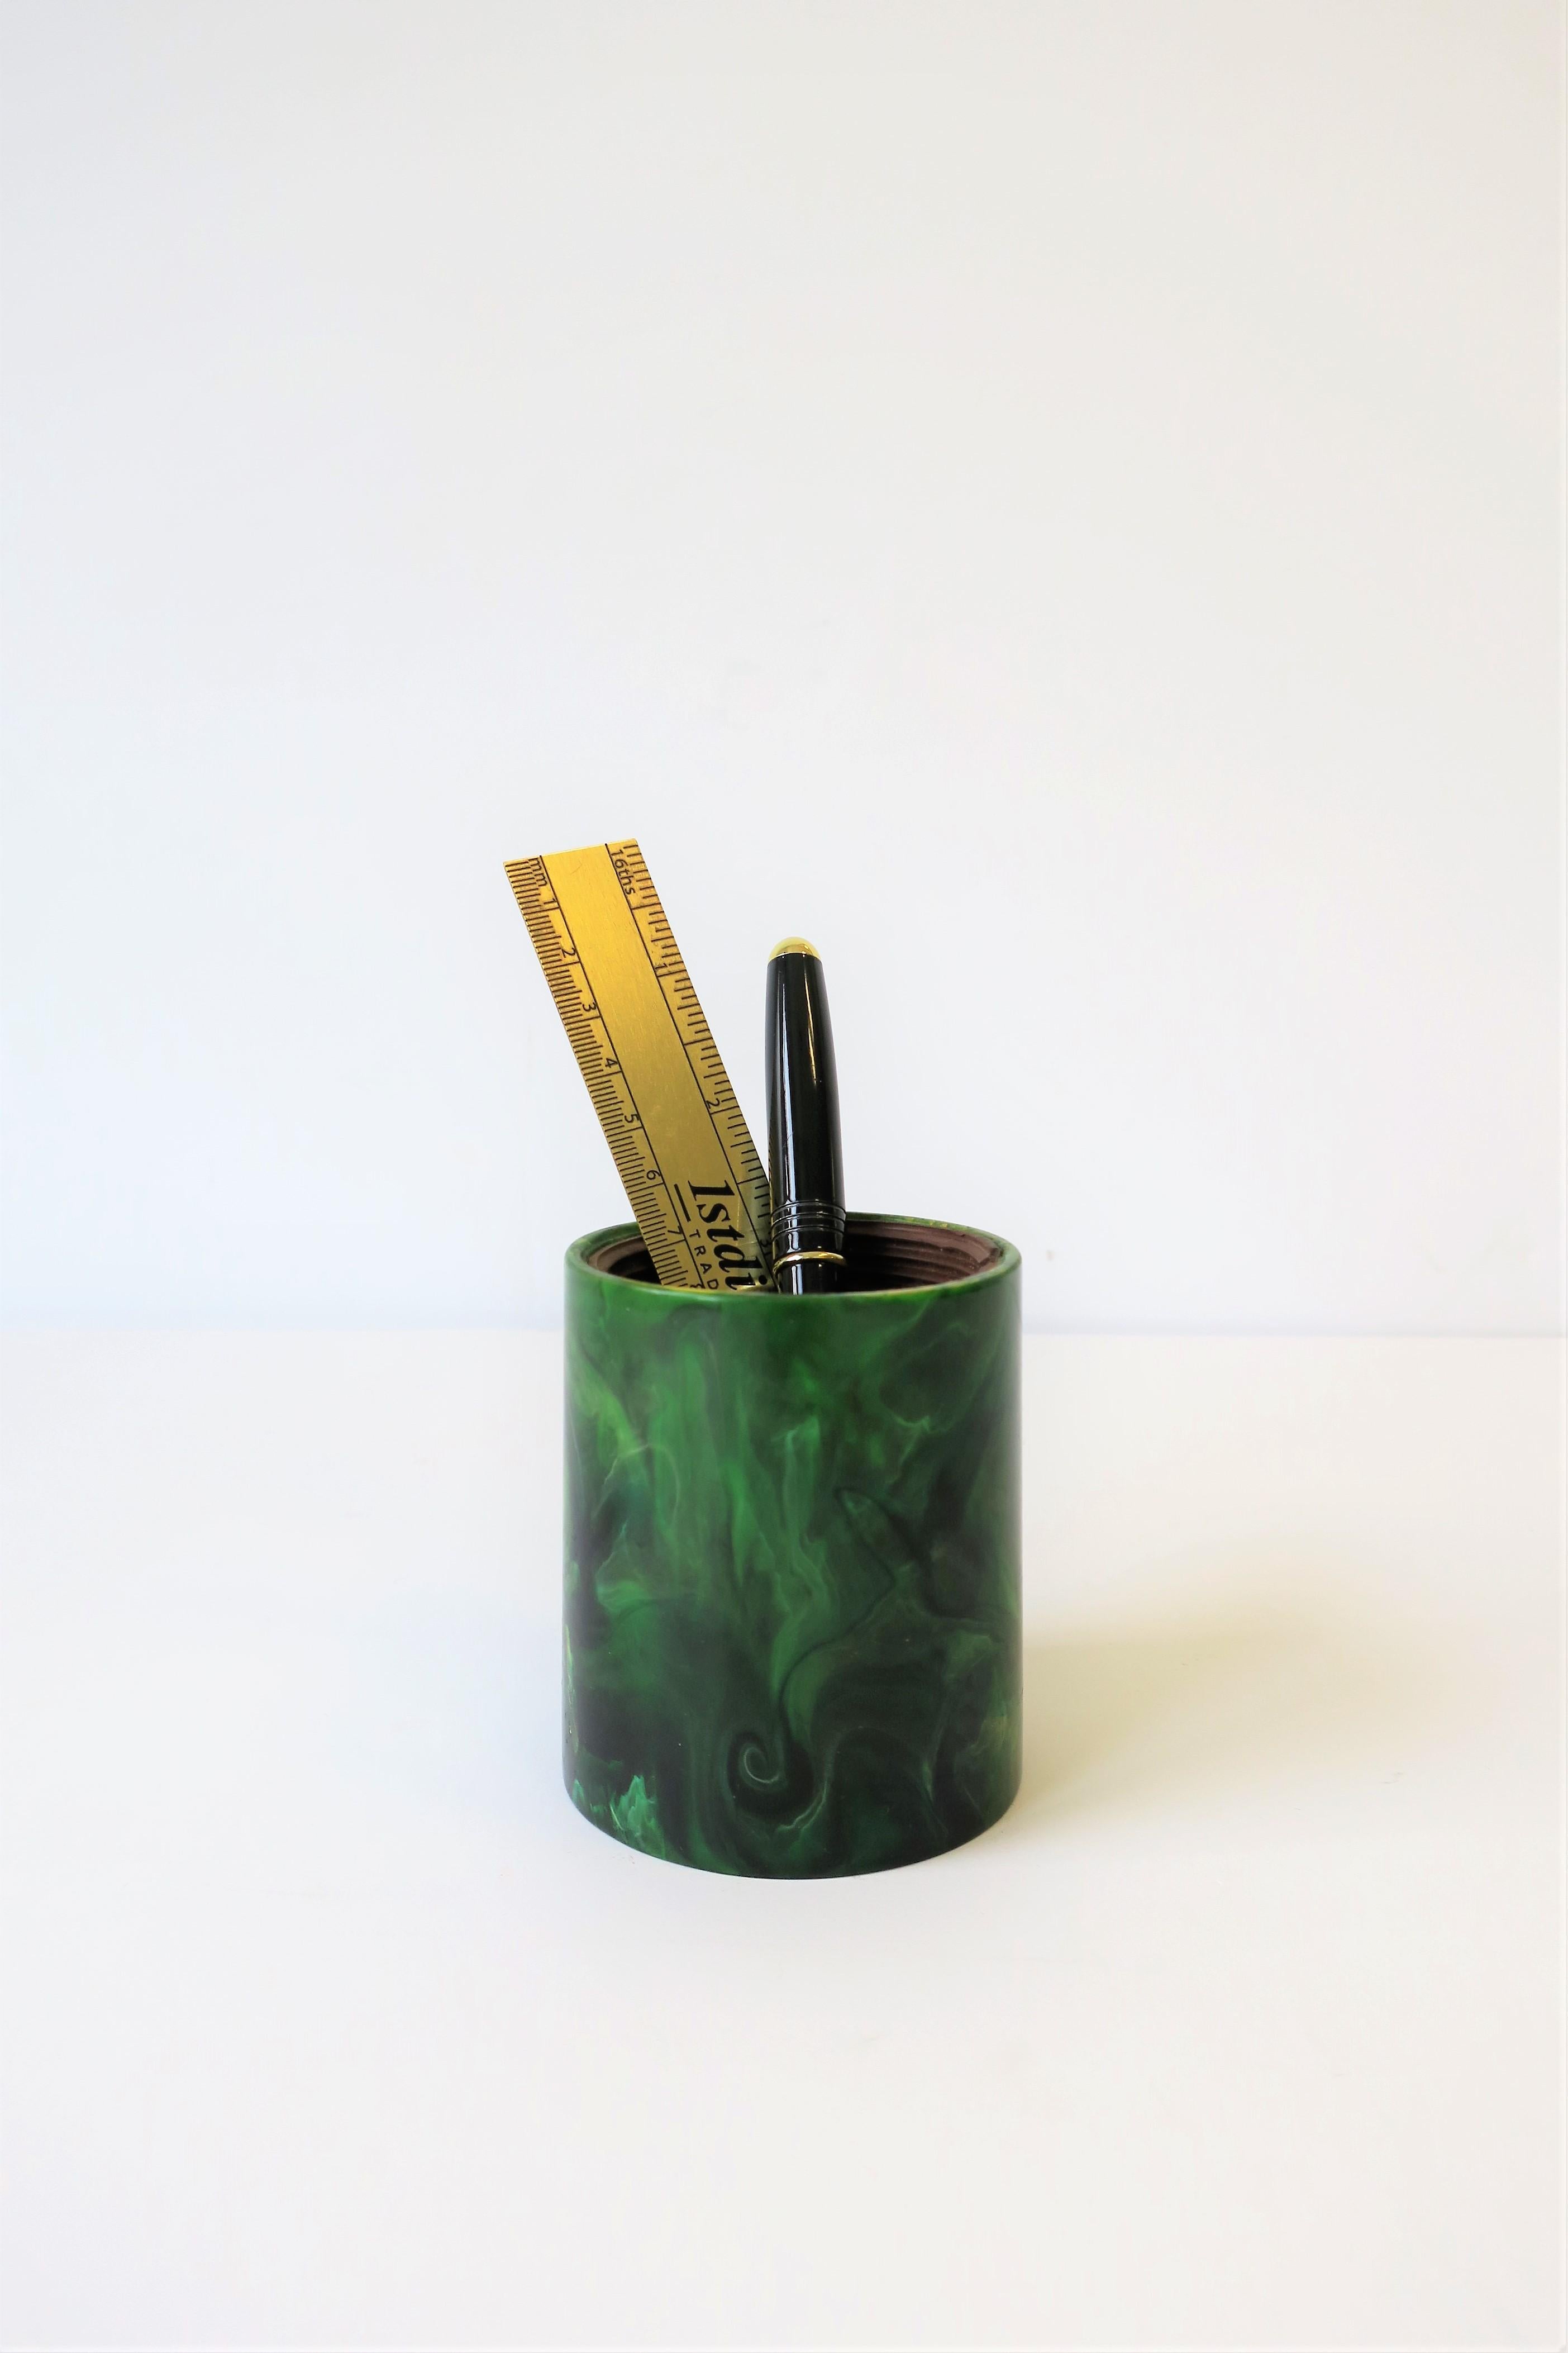 Late 20th Century Vintage Modern Green Malachite Style Desk Pen Pencil Holder Cup